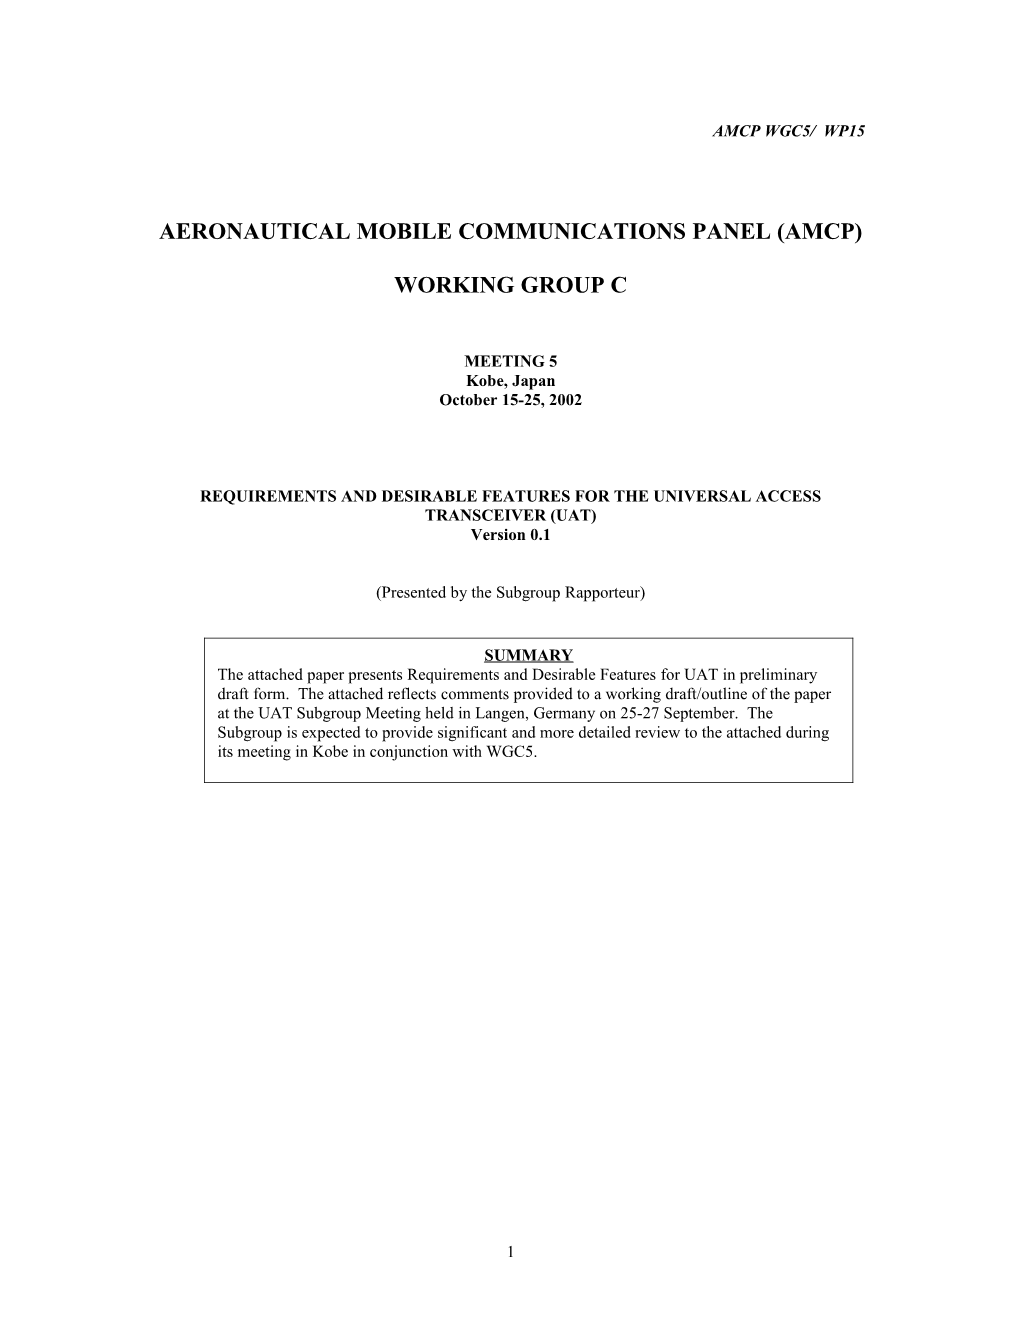 AMCP/8 Report; Non-ATS Communications